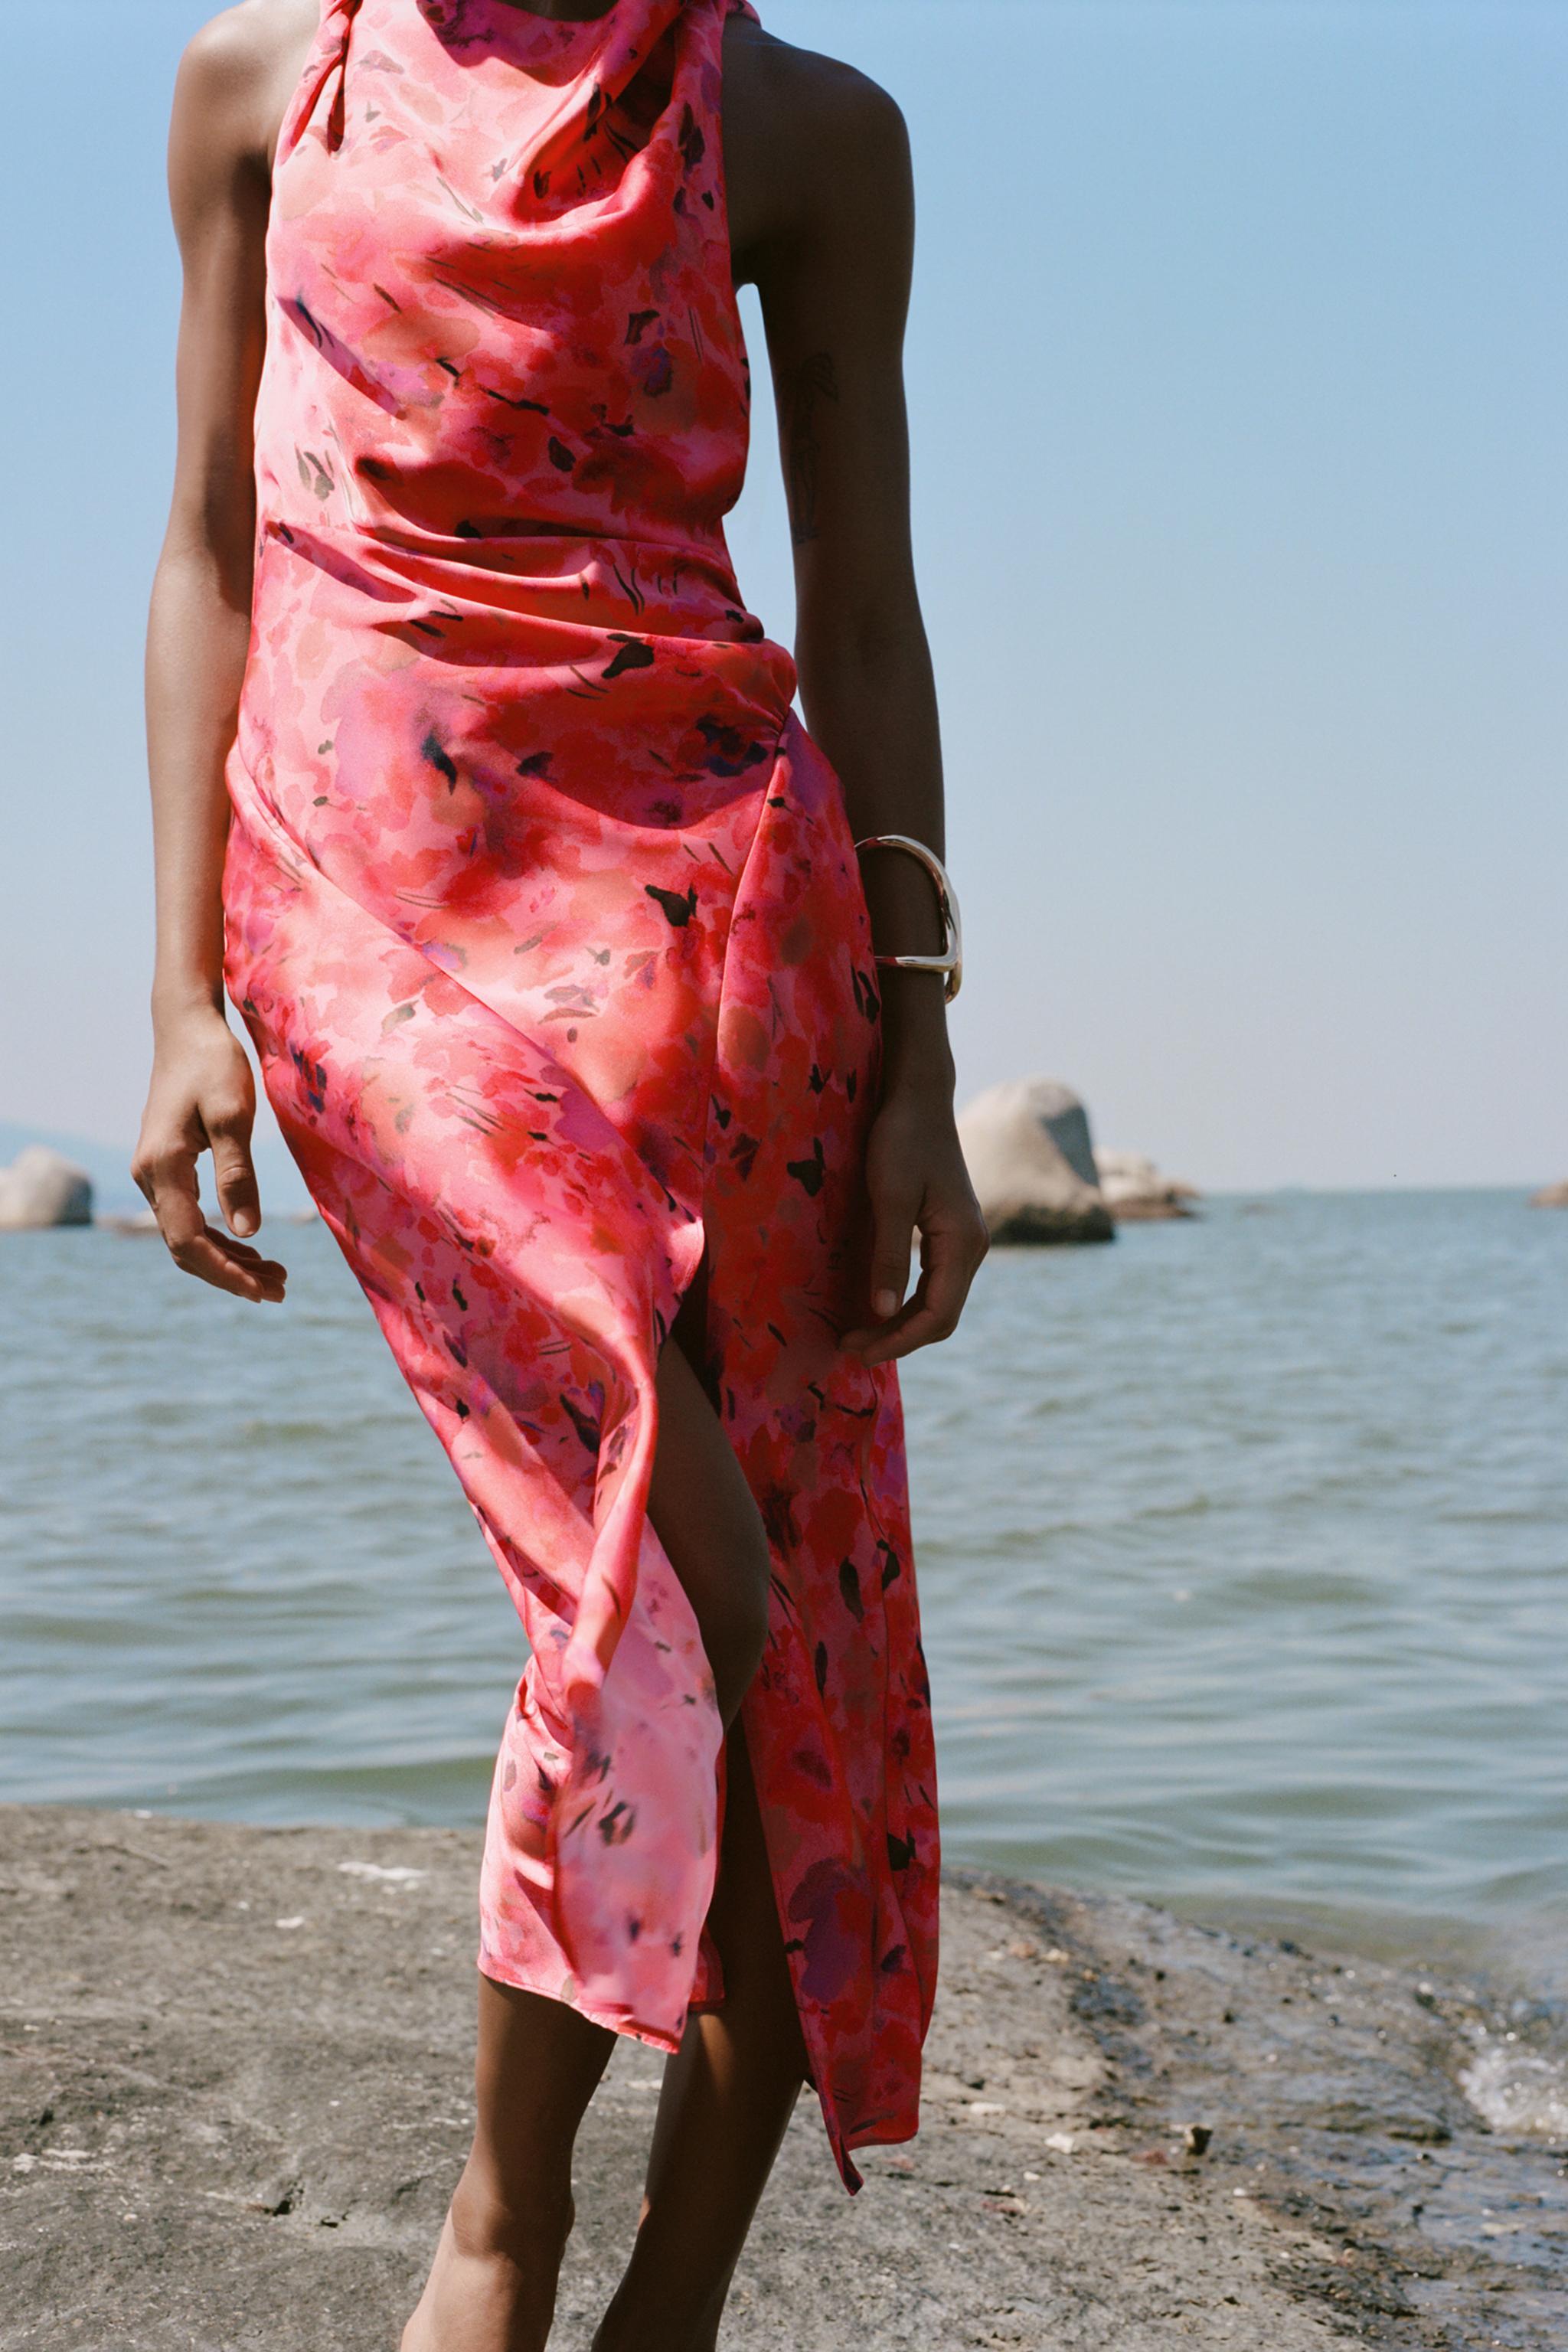 NWT. Zara Multicolored Satin Effect Festival Hippie Geometric Print Dress  Size M